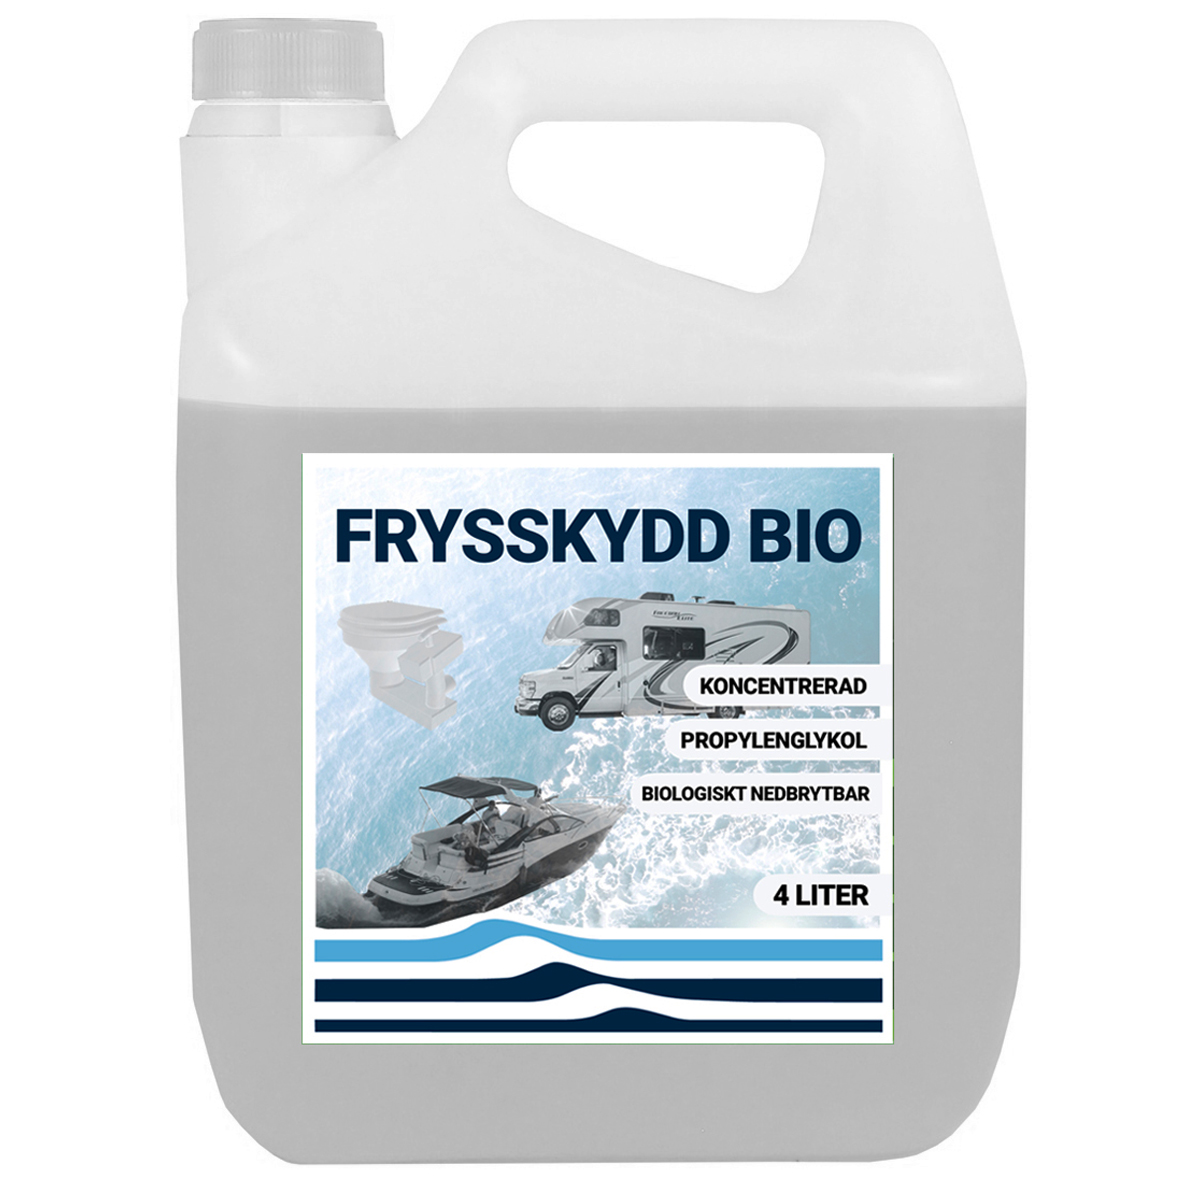 FRYSSKYDD BIO 4L